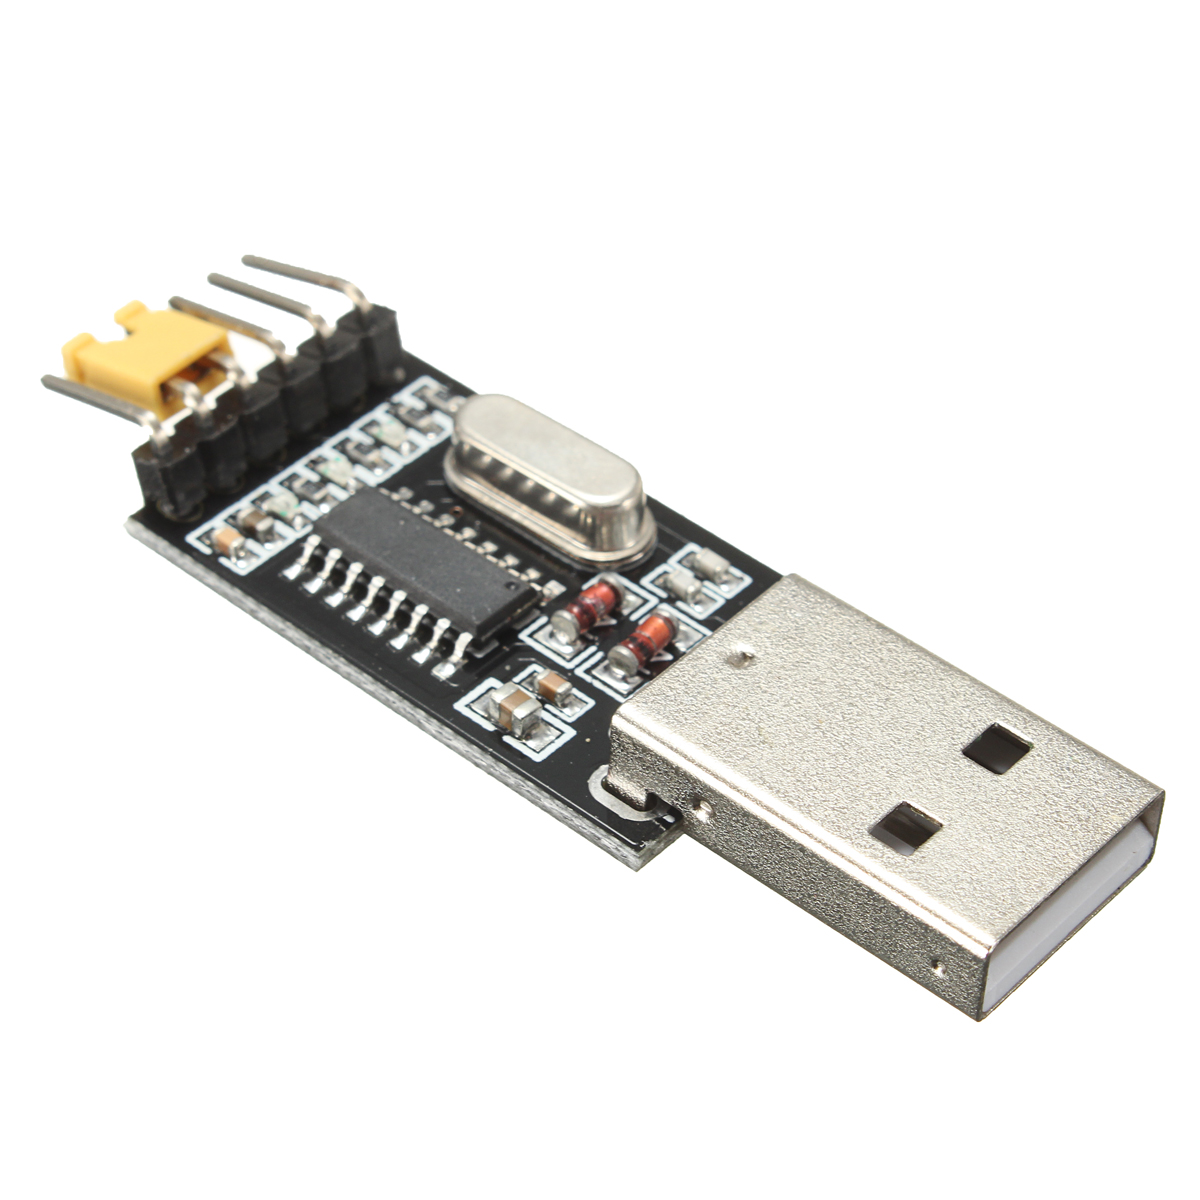 

5pcs 3.3V 5V USB to TTL Convertor CH340G UART Serial Adapter Module STC